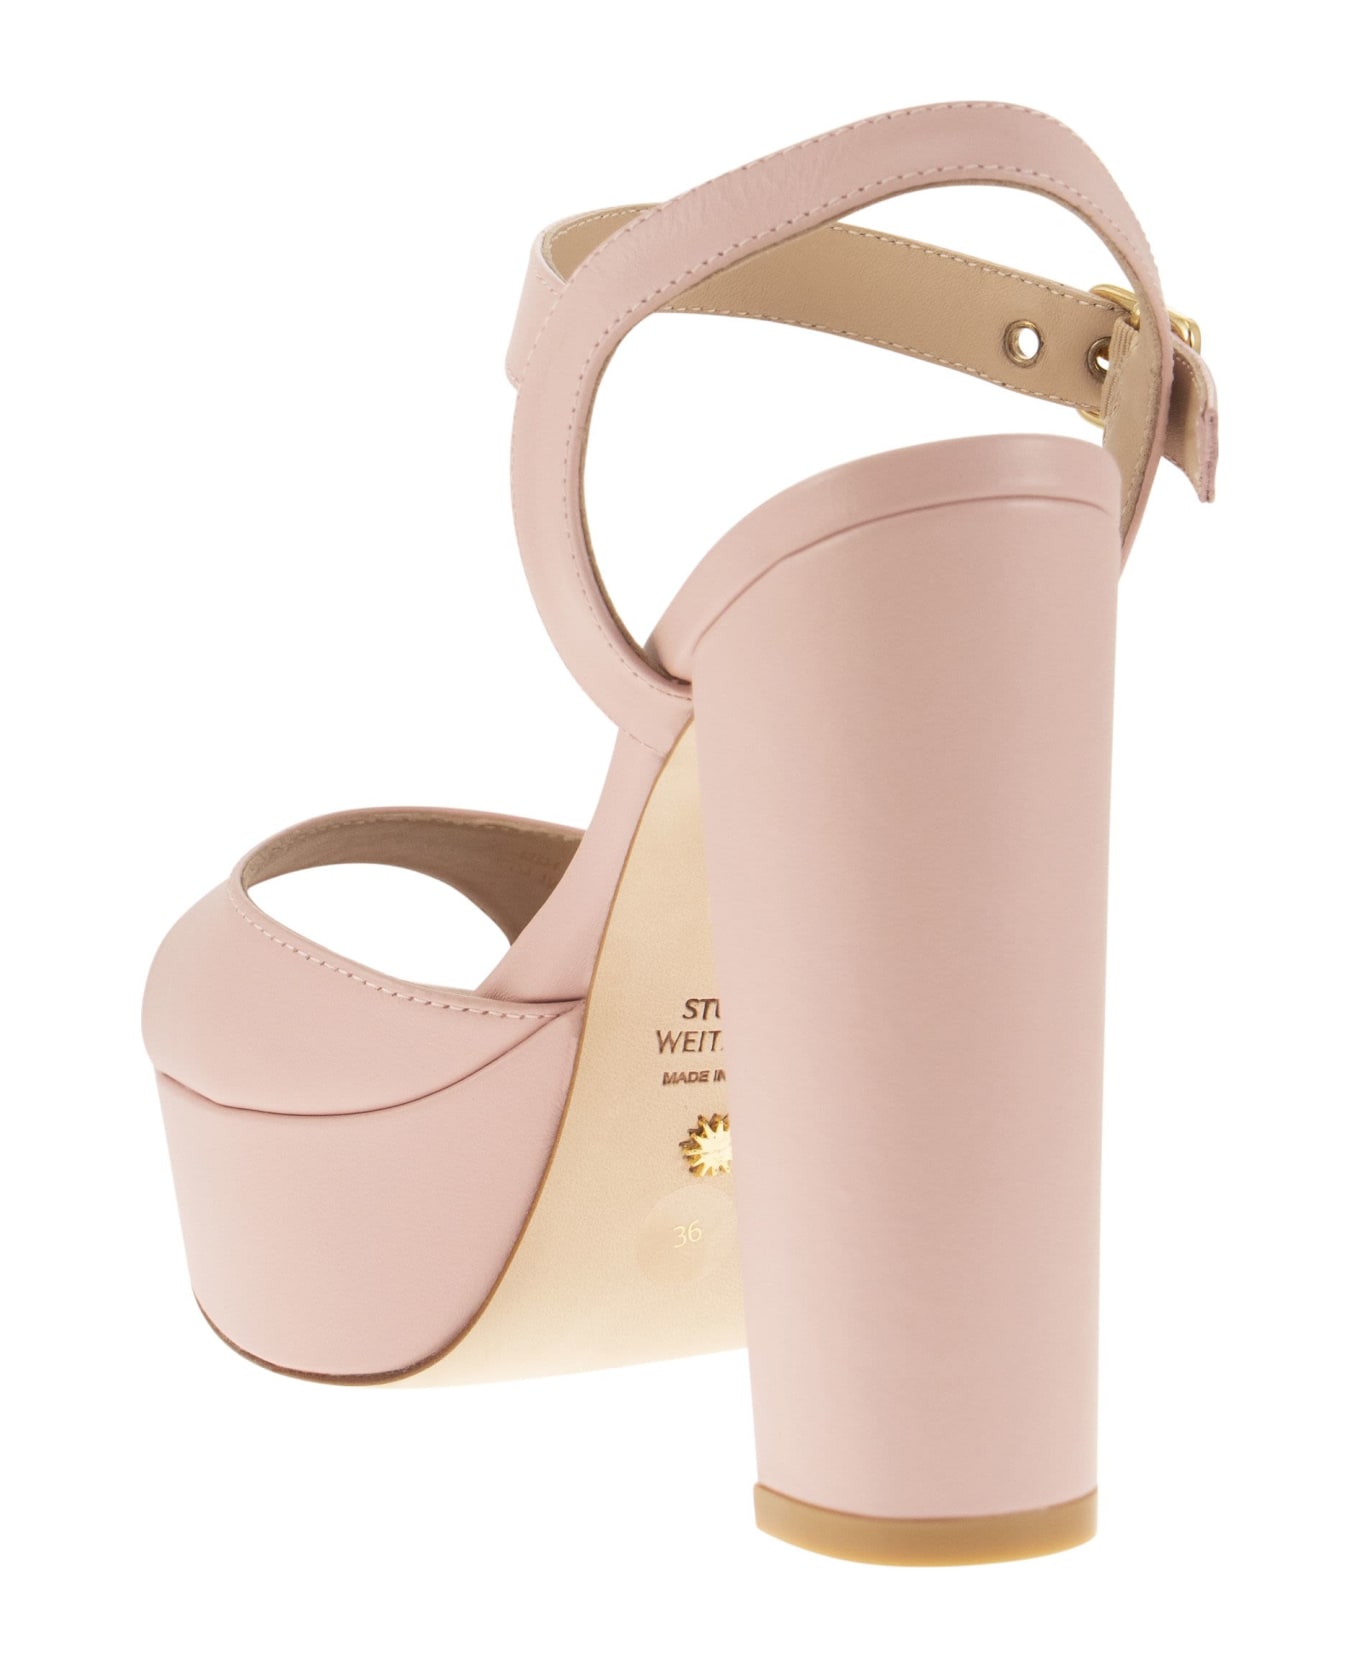 Stuart Weitzman Ryder - Leather Platform Sandals - Light Pink サンダル